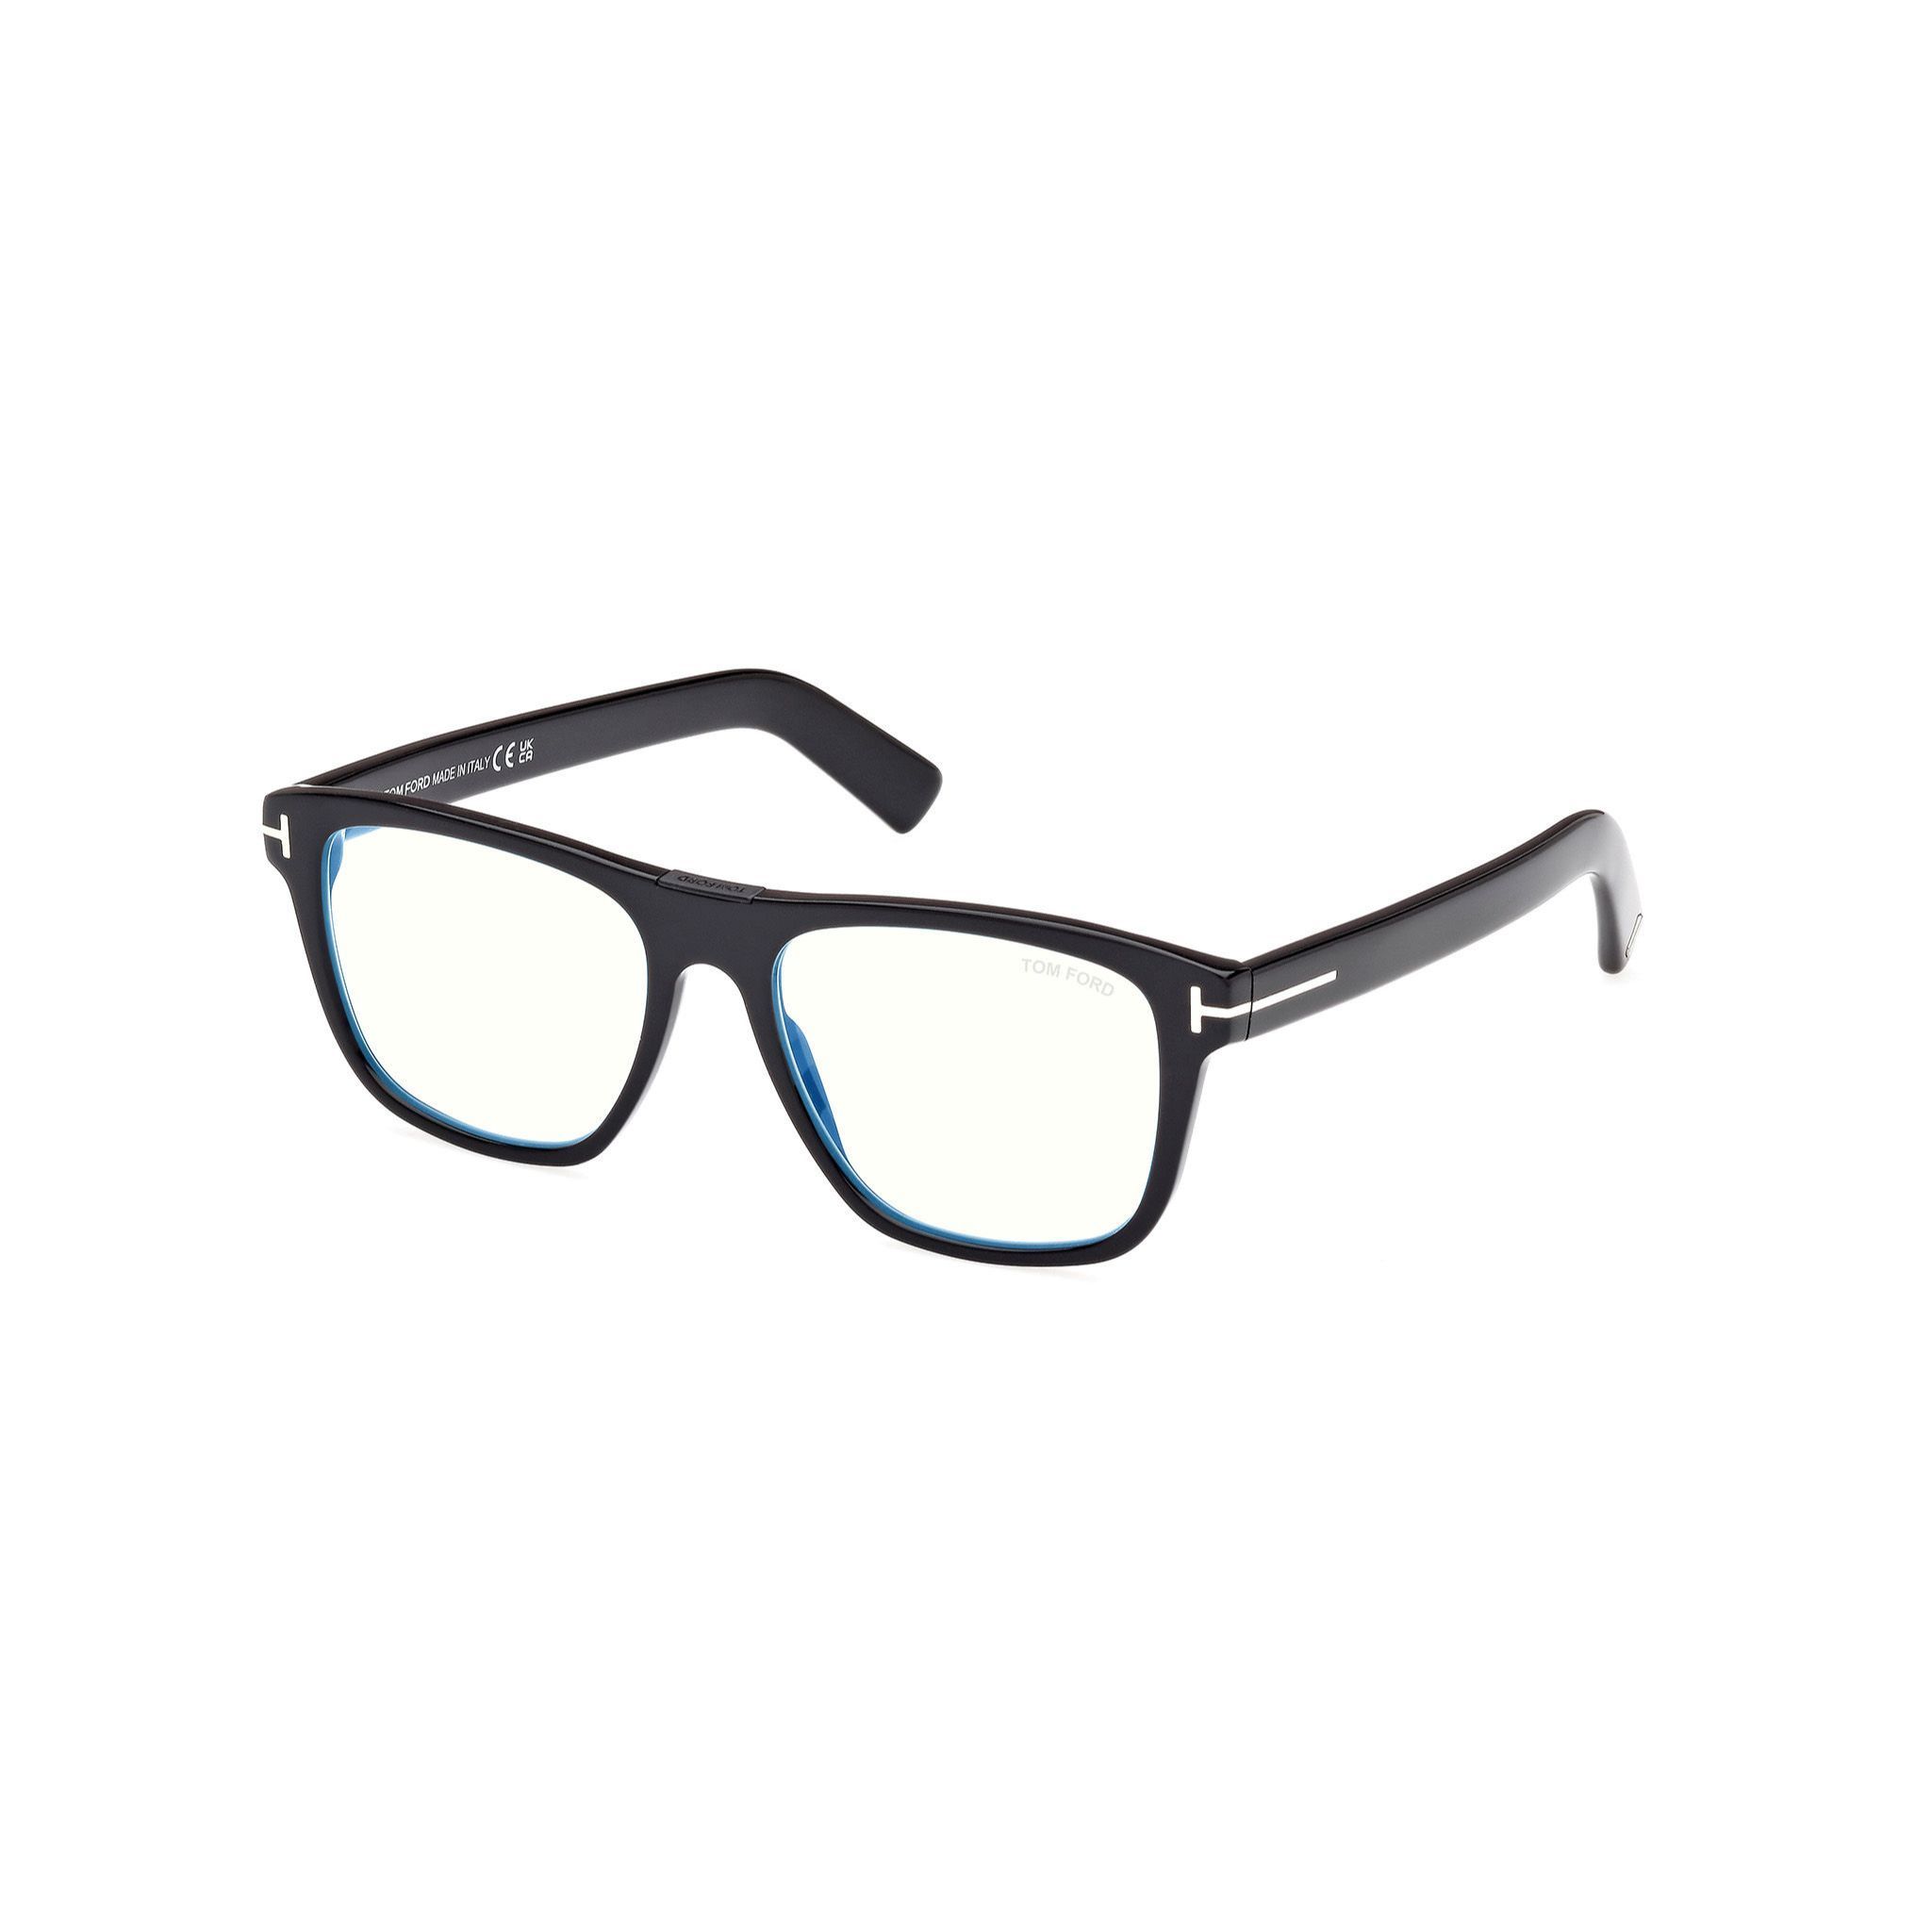 FT5902 Square Eyeglasses B001 - size  54